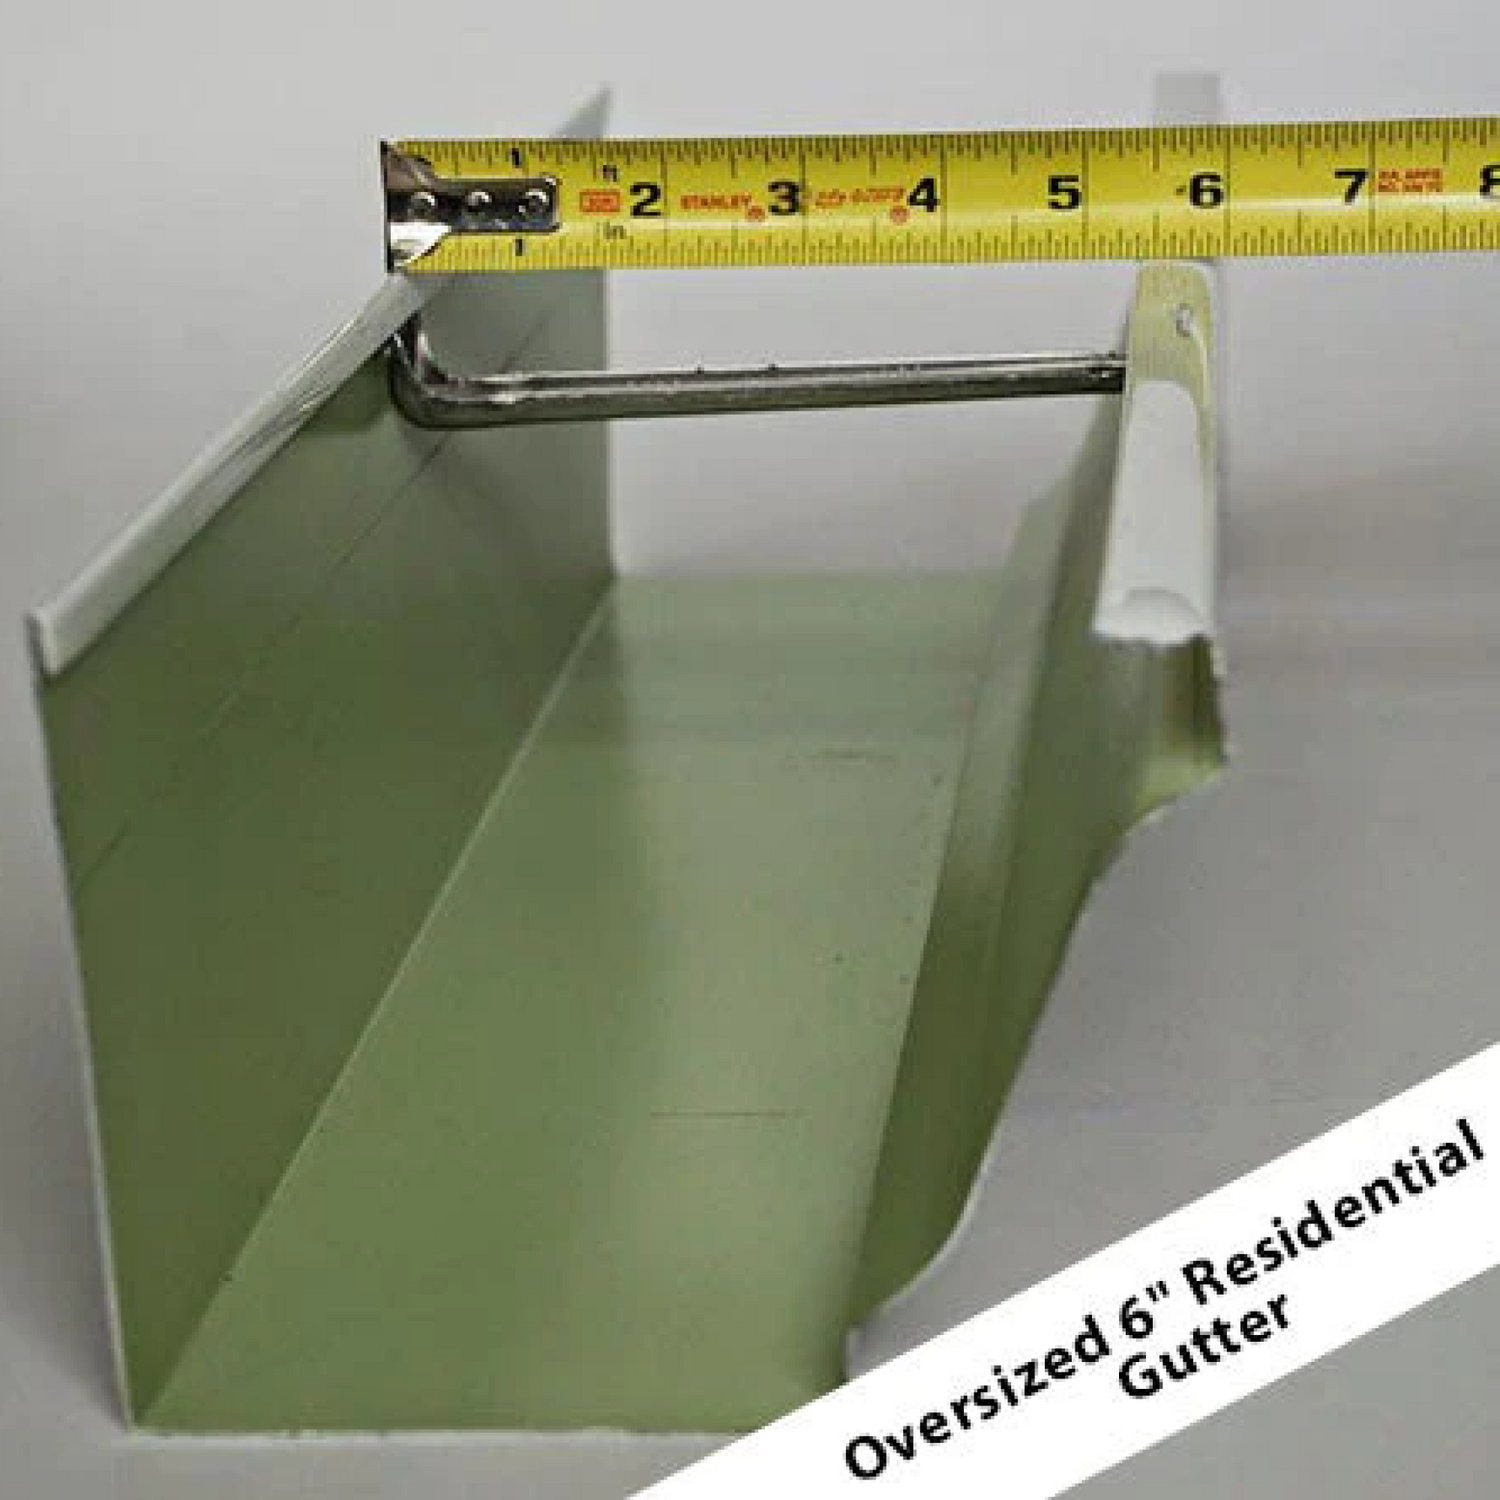 Oversize 6 inch k style gutter guard